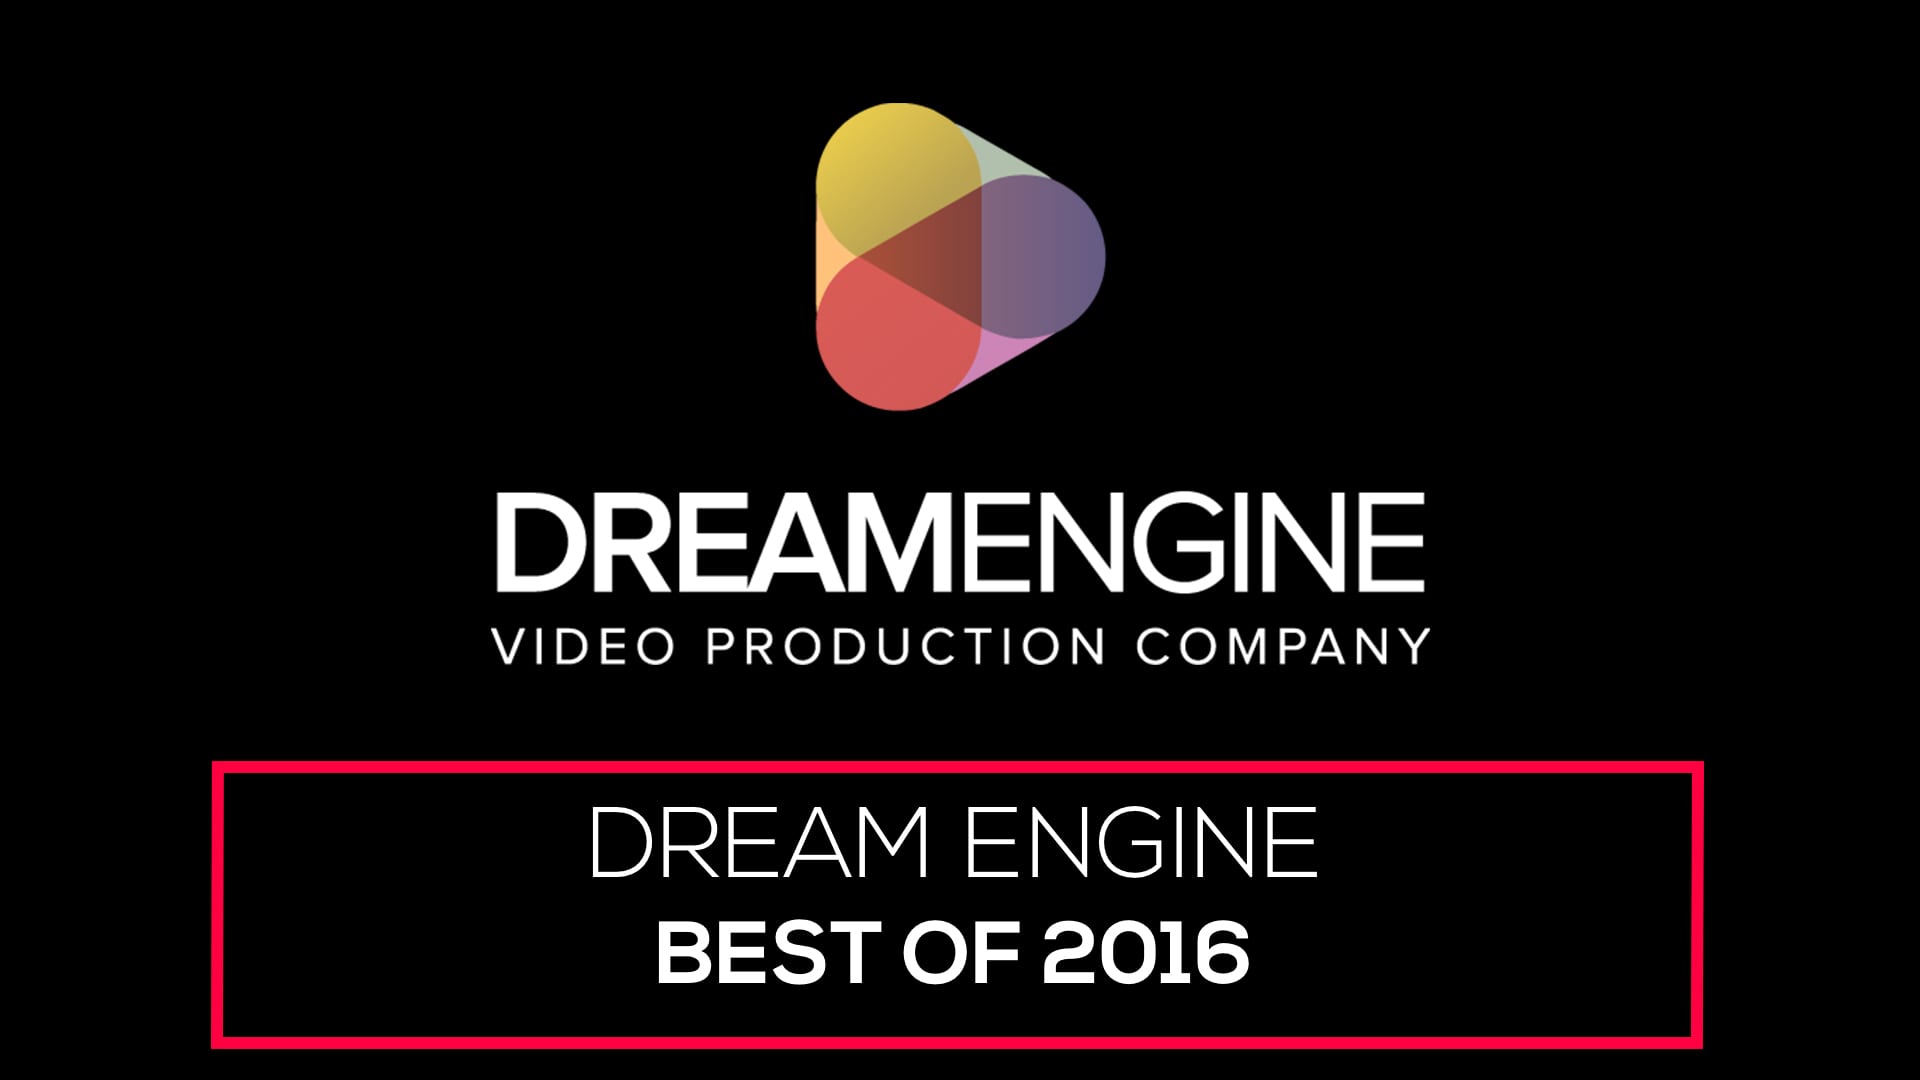 Dream Engine best of 2016